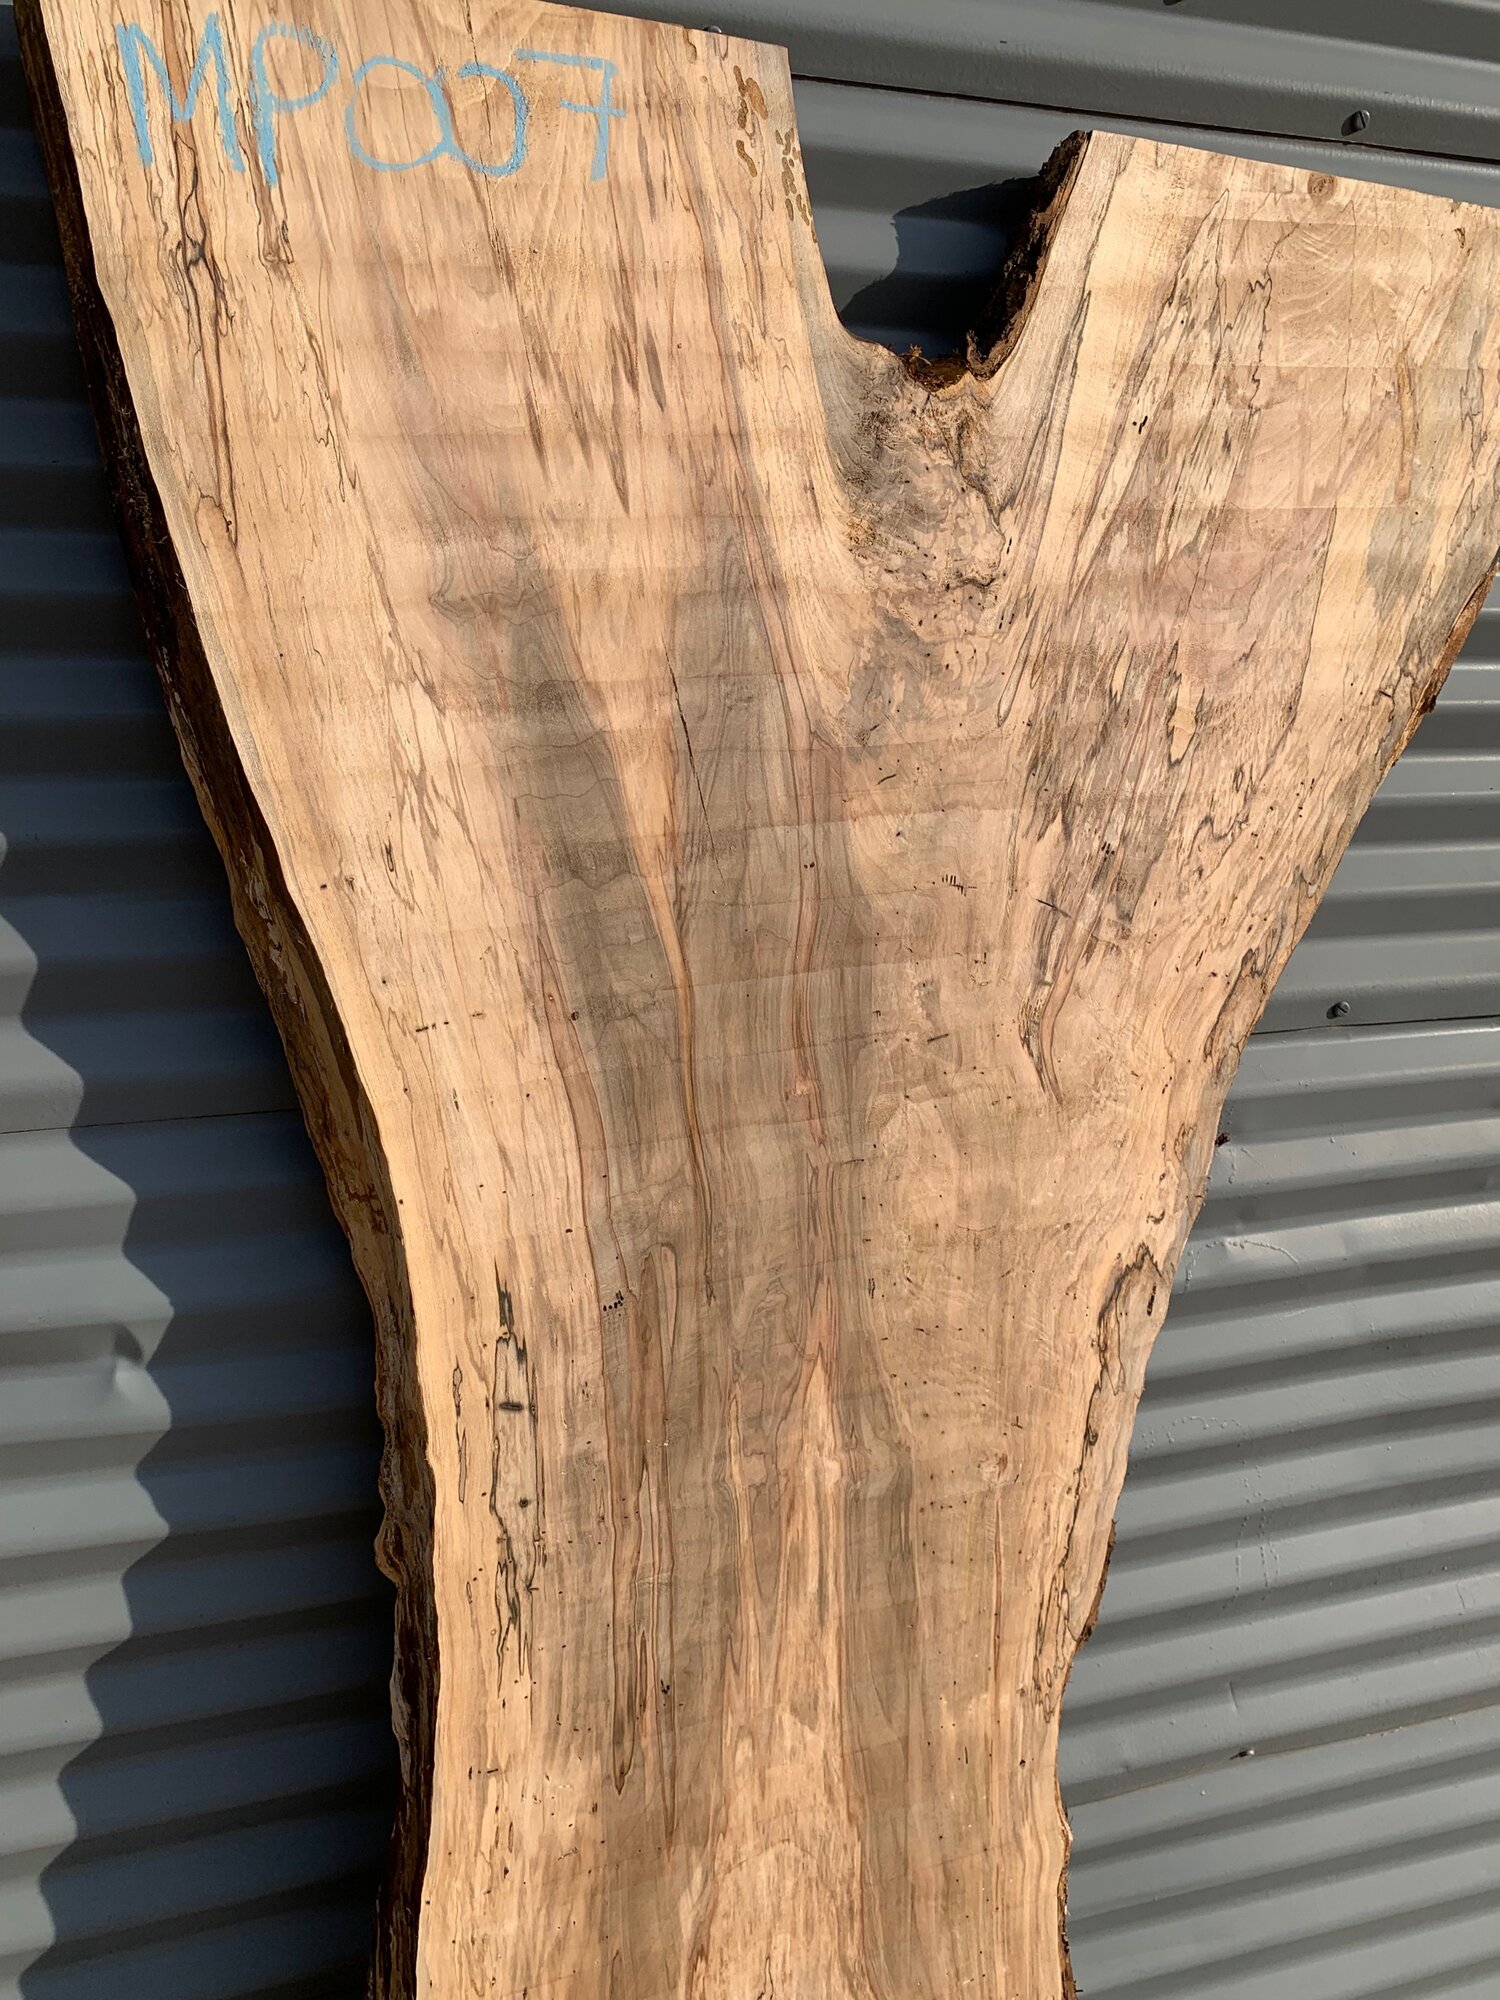 74” long x 21.5 - 37.5” wide x 1.75” thick Silver Maple Live Edge Slab.  Kiln Dried. — Live Edge Wood Slabs Atlanta